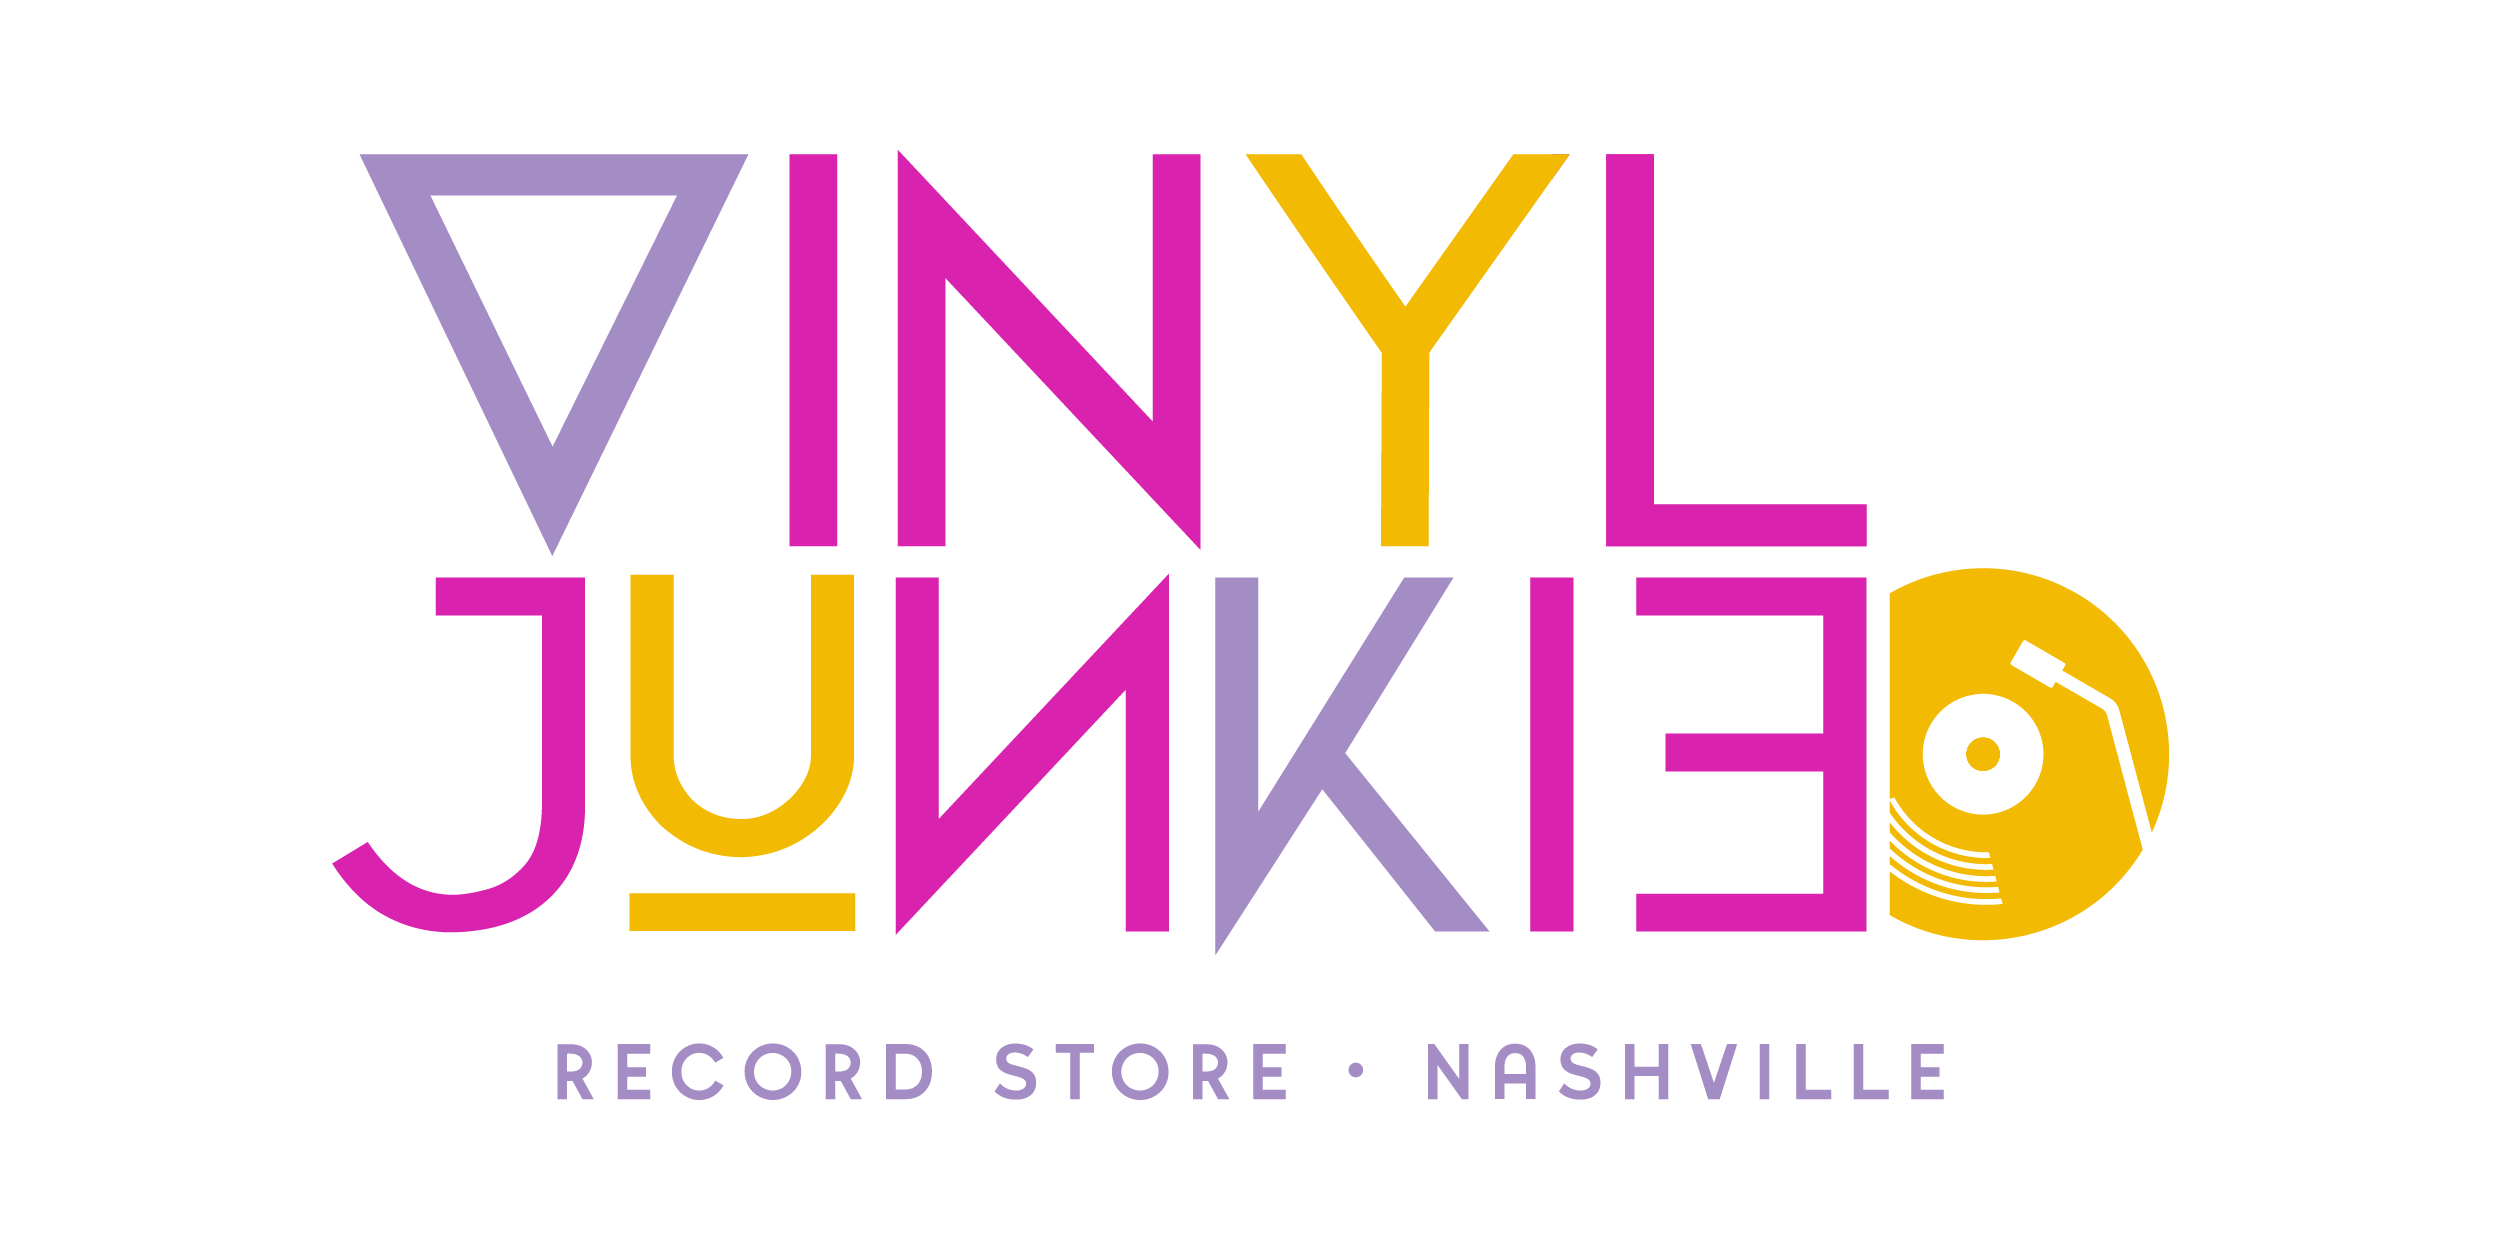 The Vinyl Junkie Logo 2